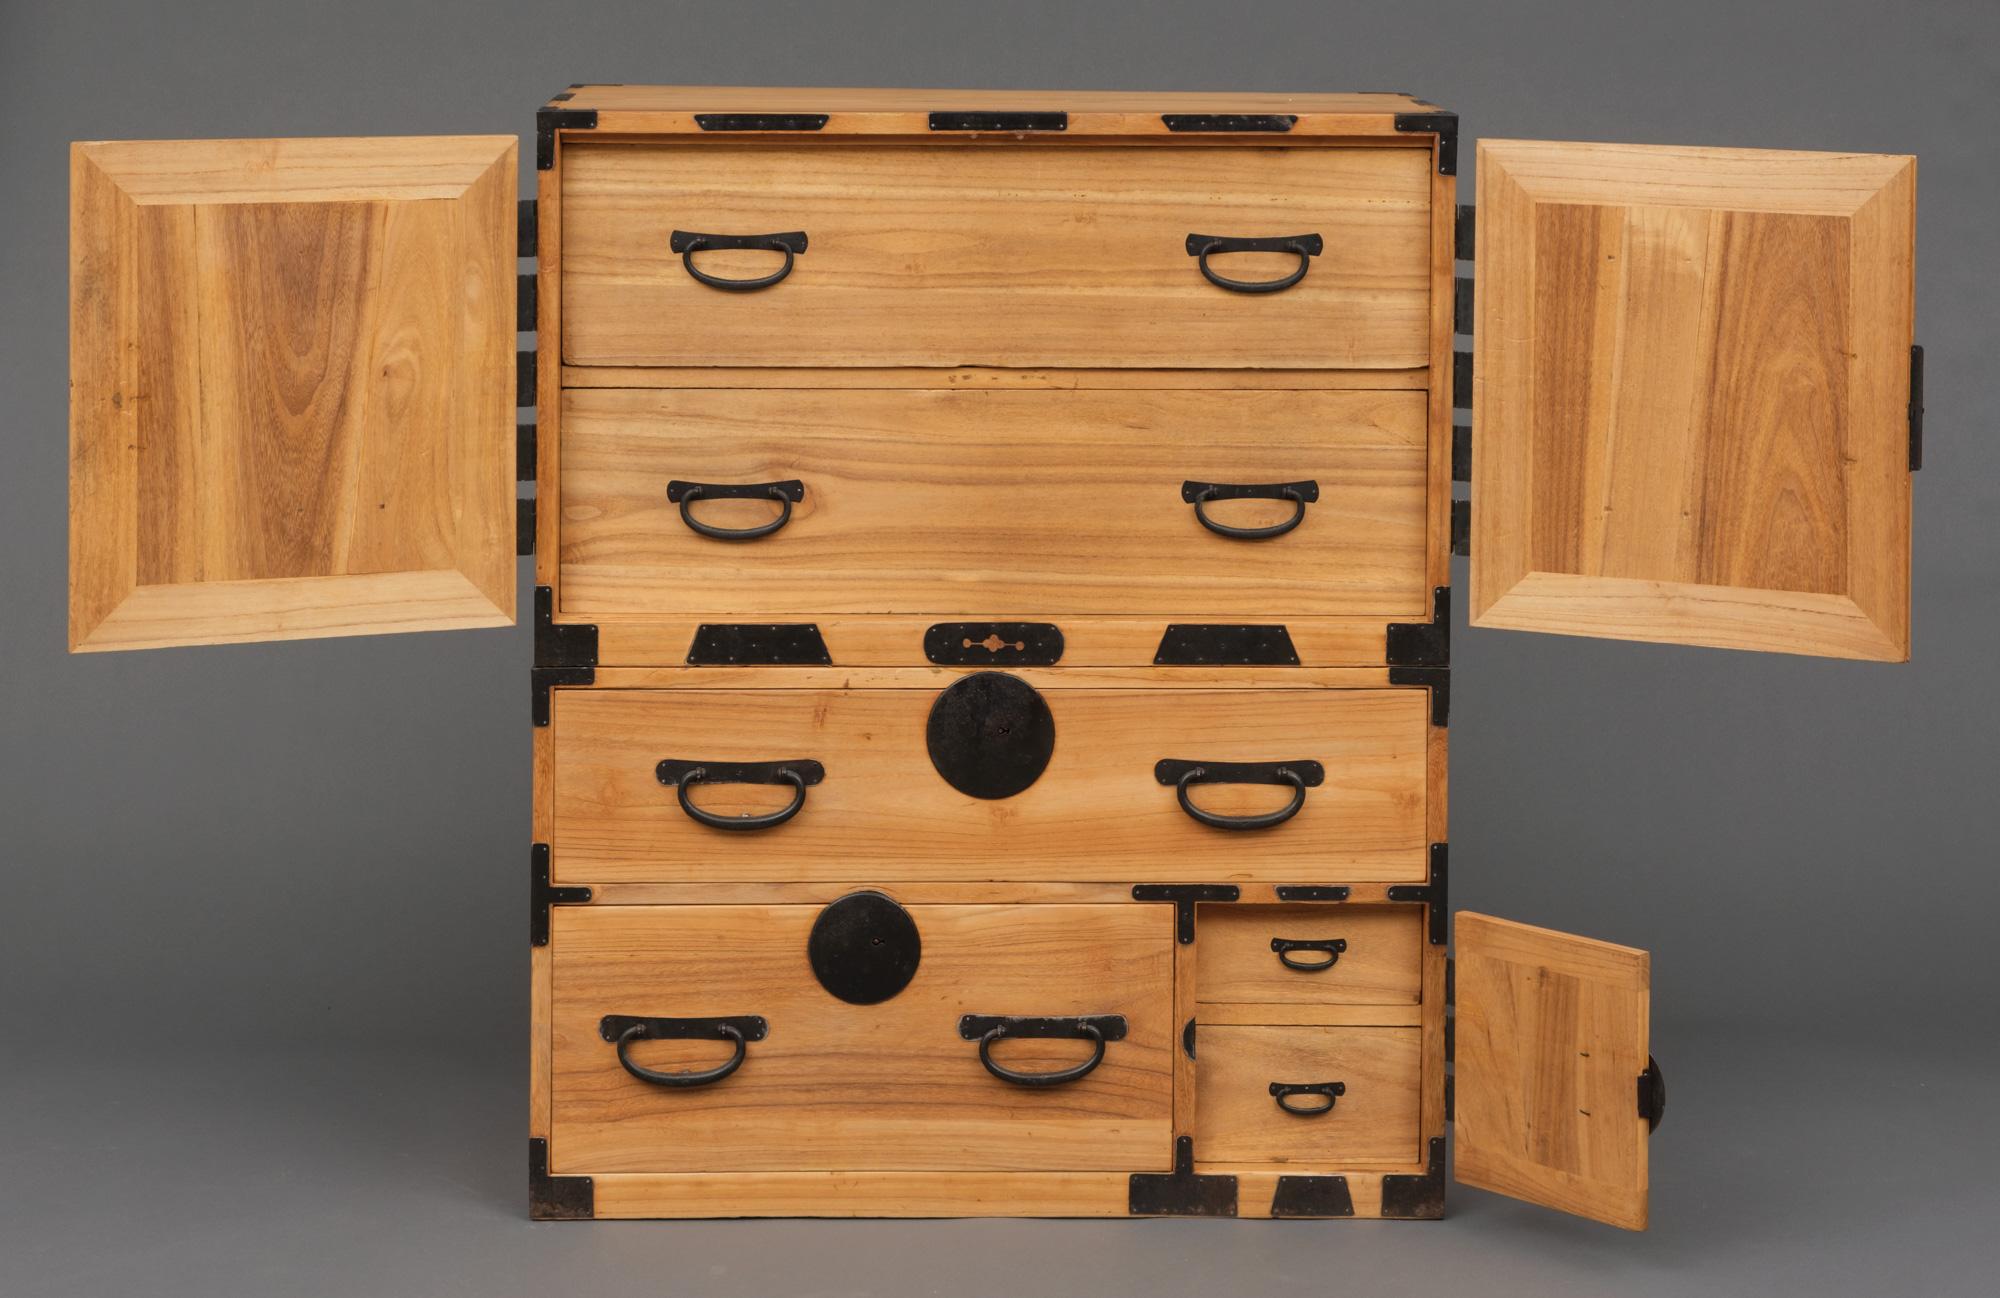 19th Century Japanese Kantô kannon’biraki ishô’dansu 衣装箪笥 (chest of drawers with doors) For Sale